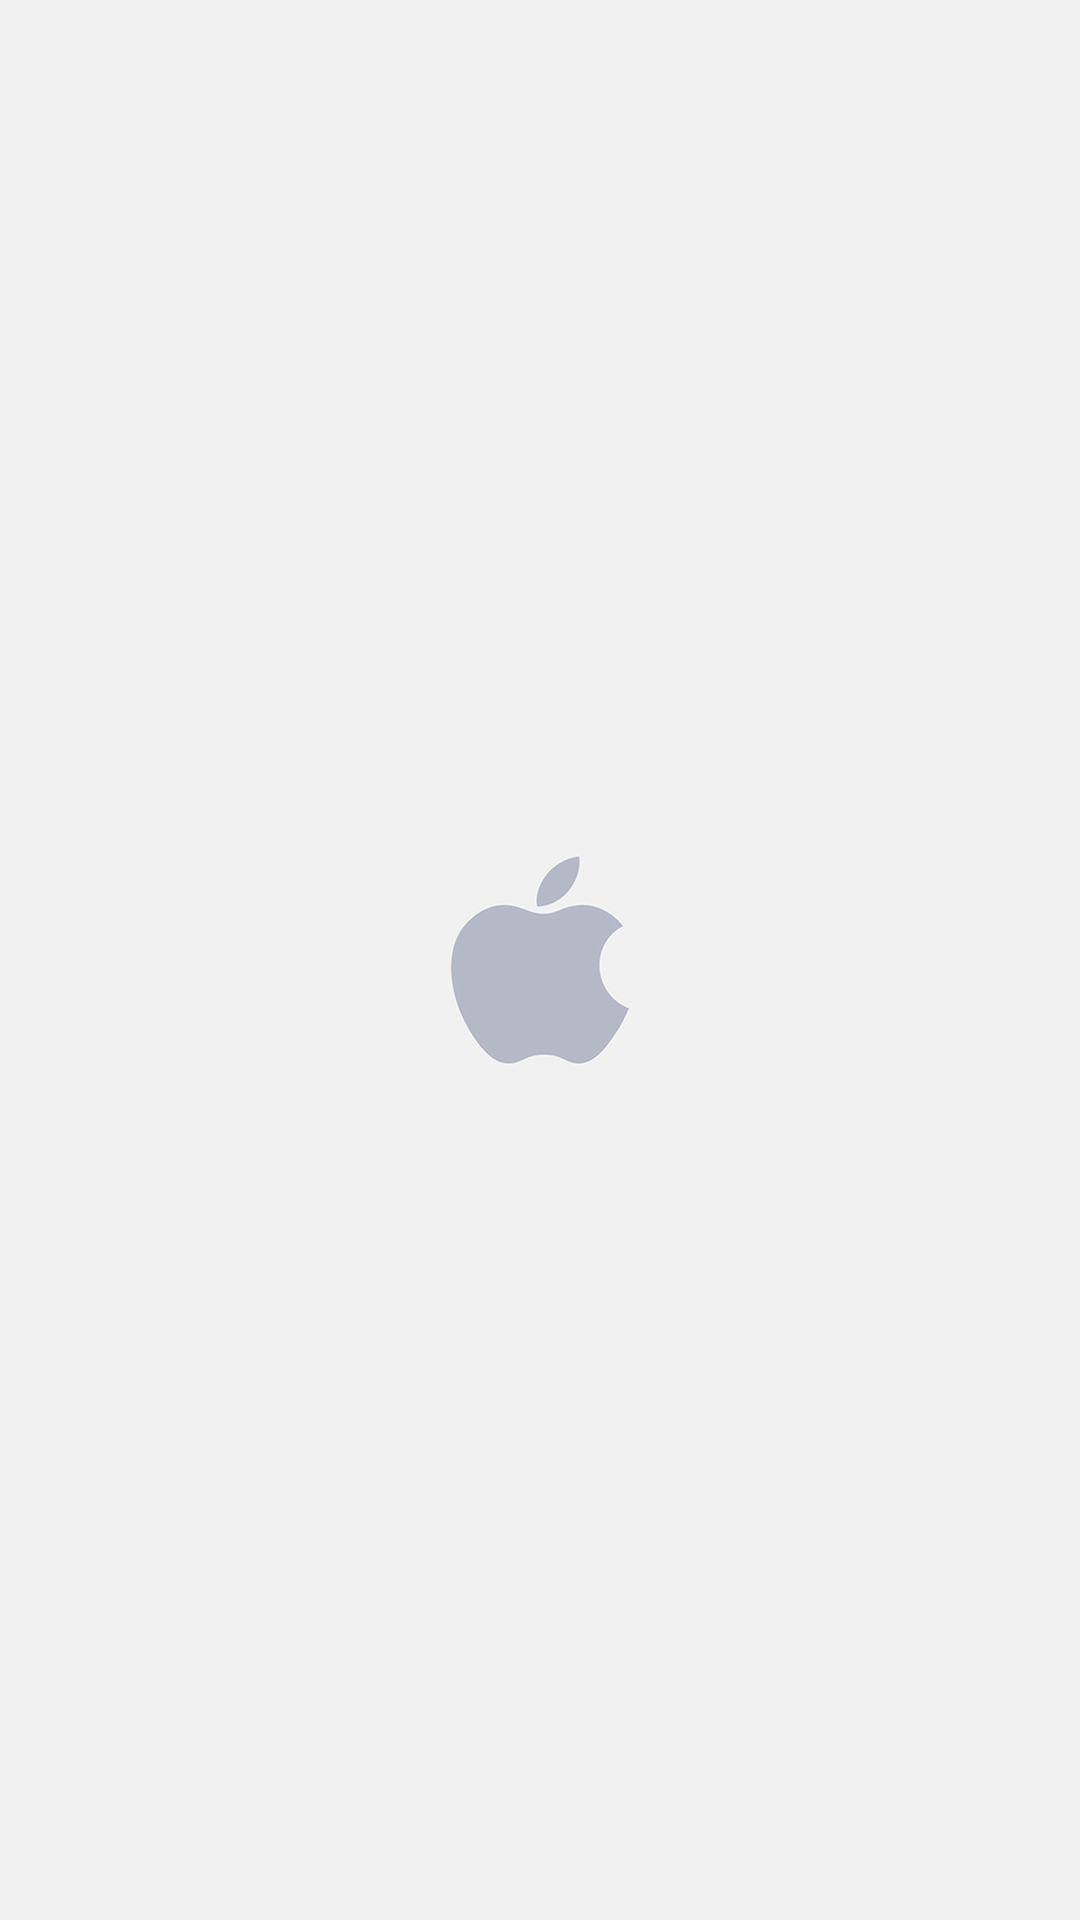 Apple Logo White Art Illustration iPhone 8 Wallpapers Free.